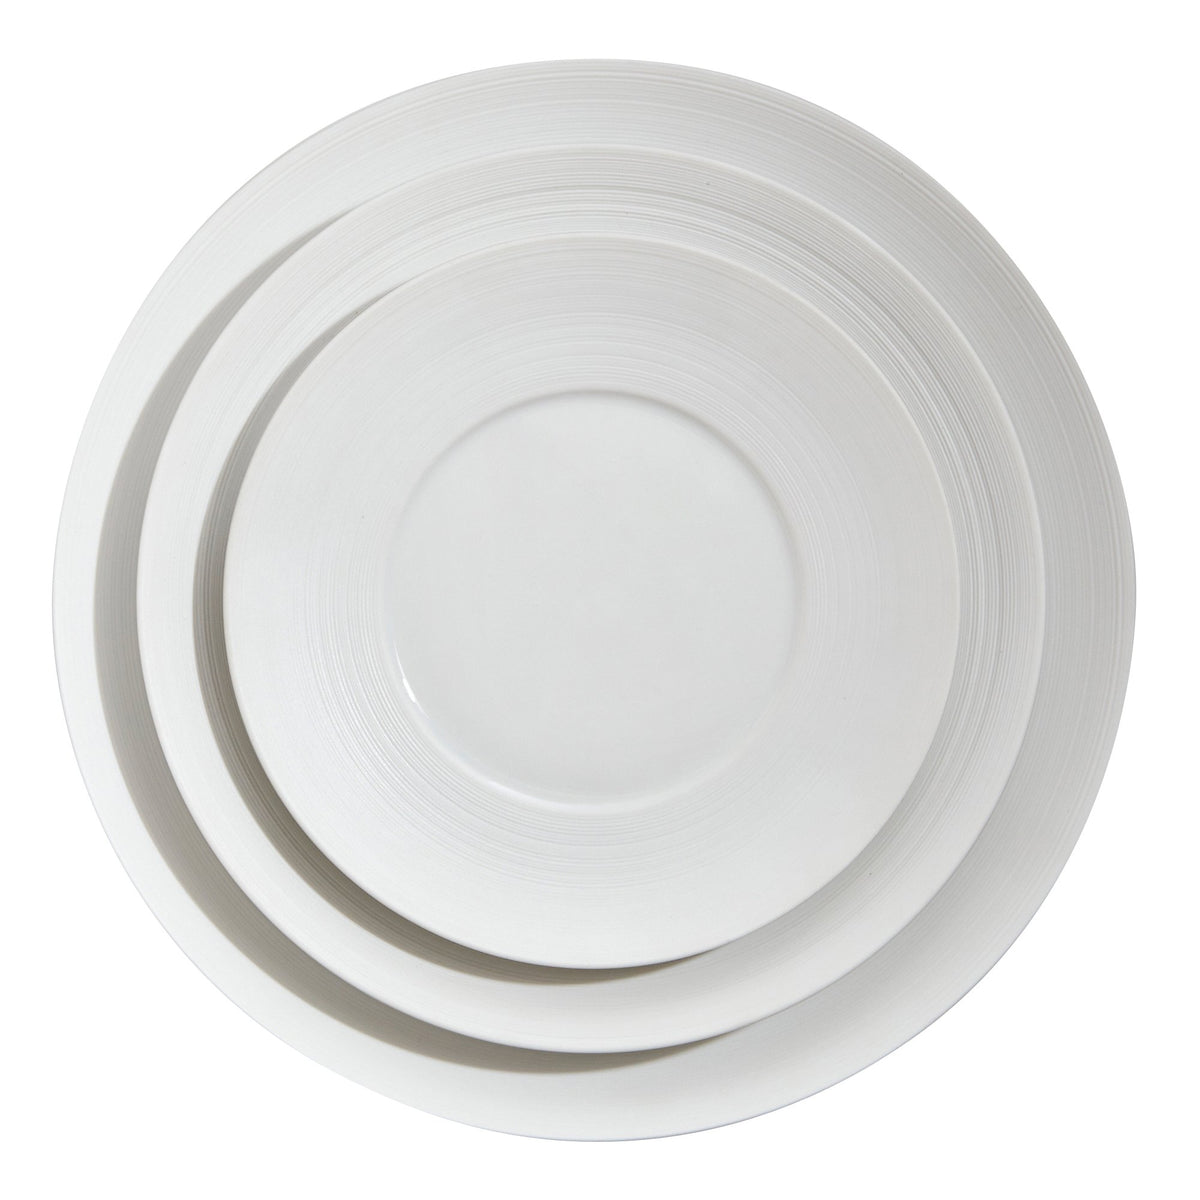 Hemisphere Dessert Plate - White